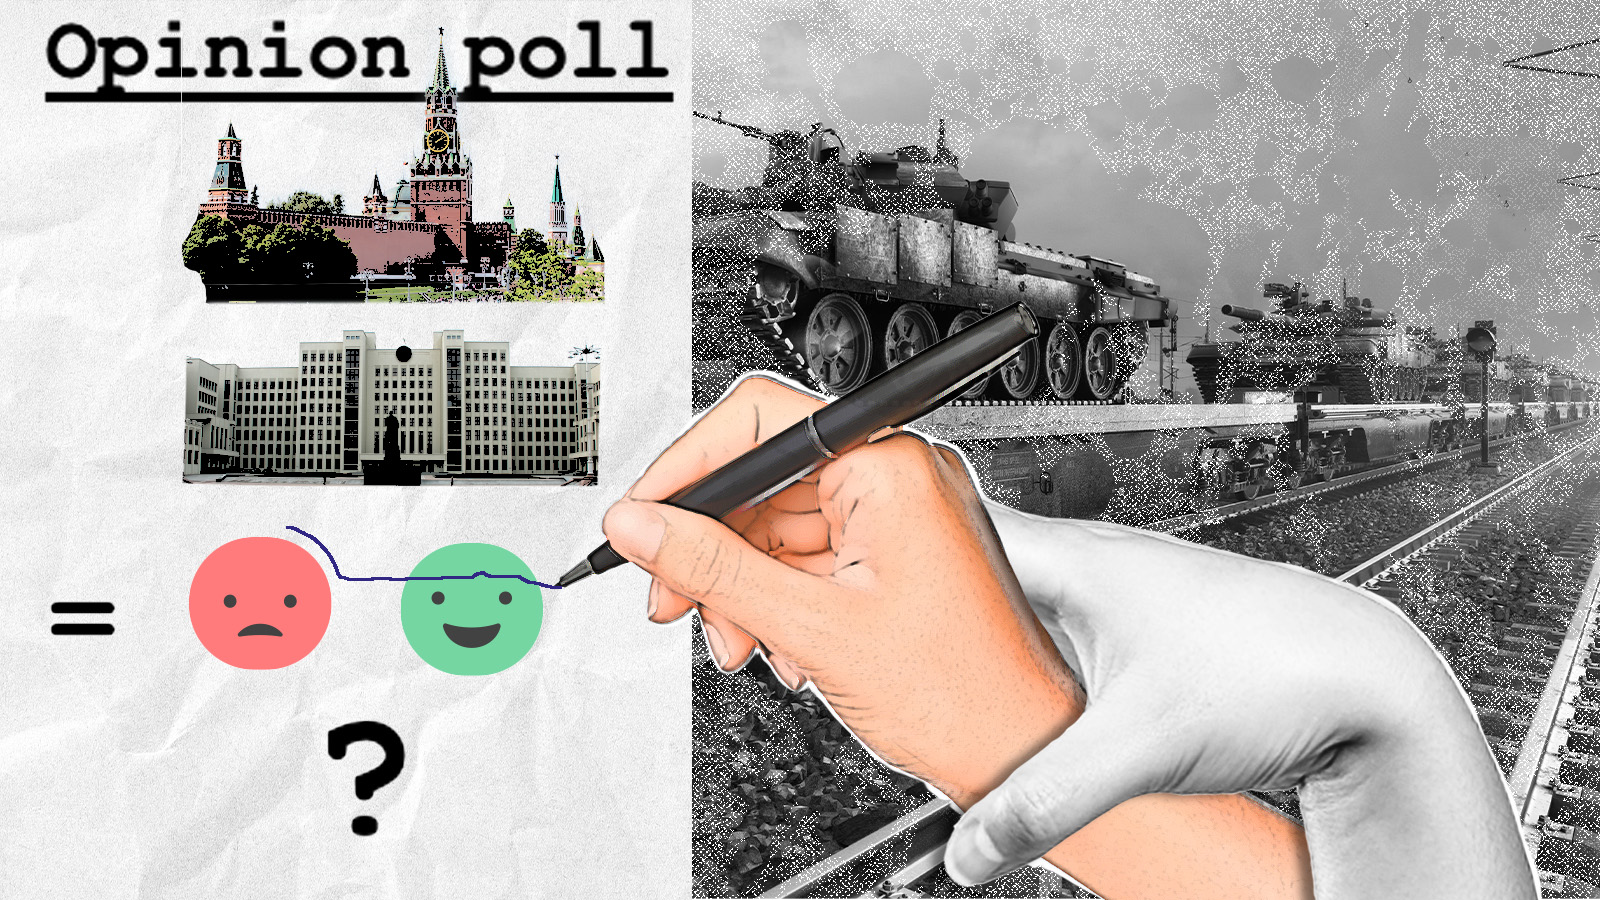 Opinion poll. Russian opinion